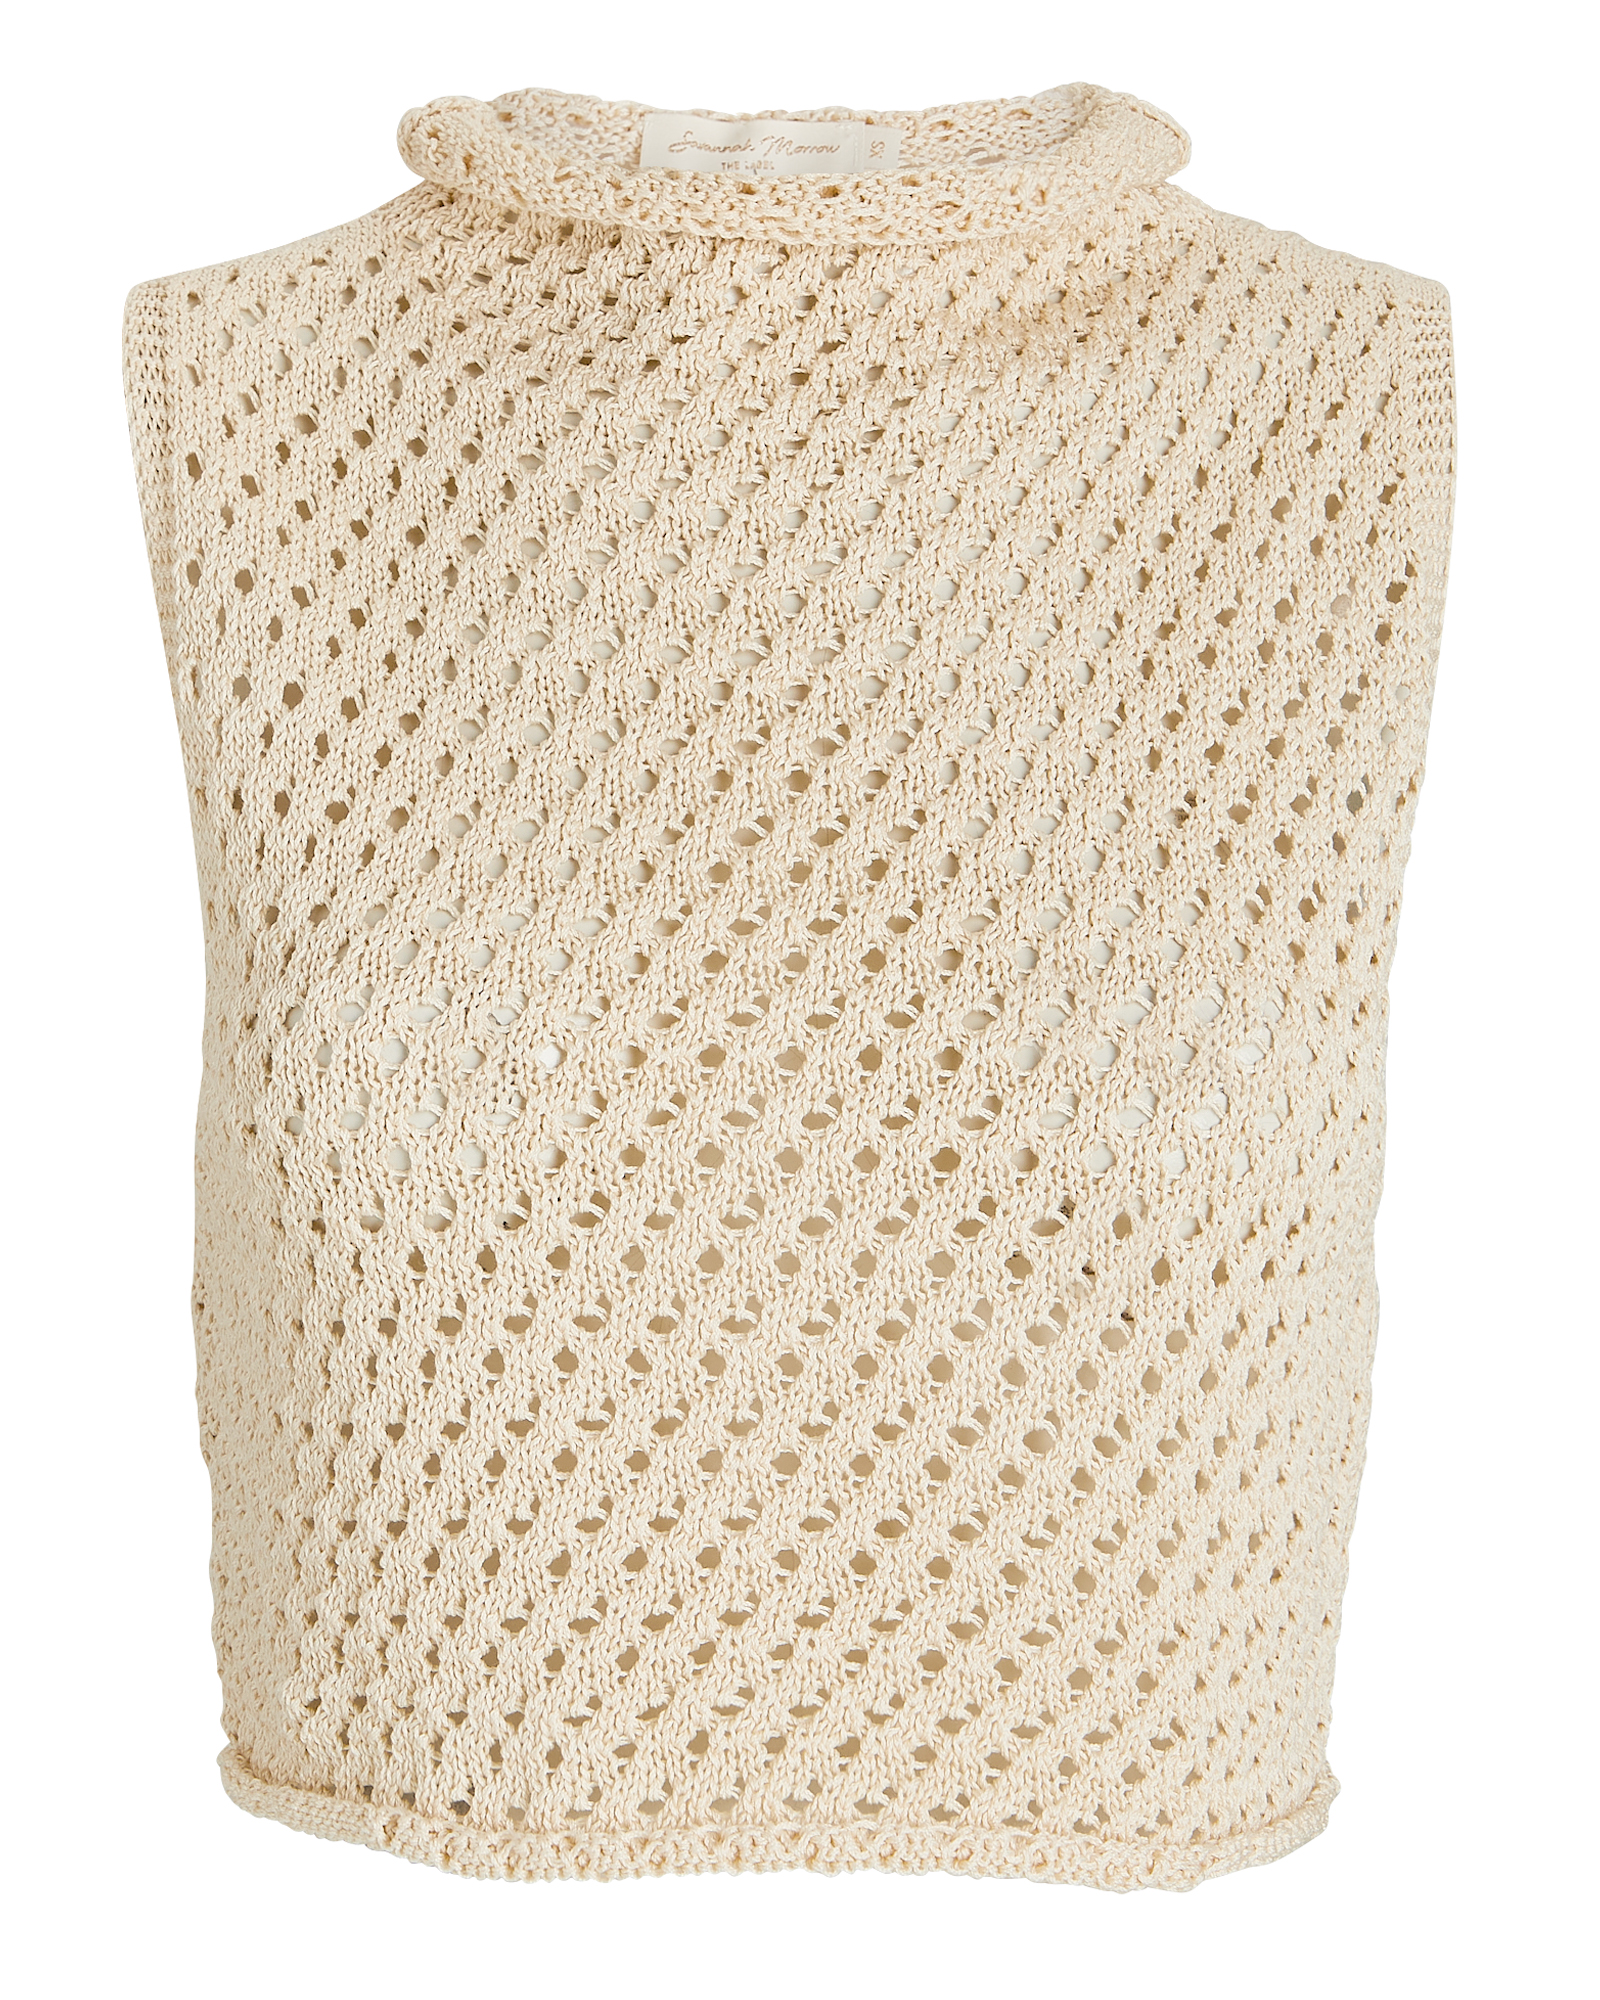 Savannah Morrow Ray Crocheted Knit Crop Top | INTERMIX®